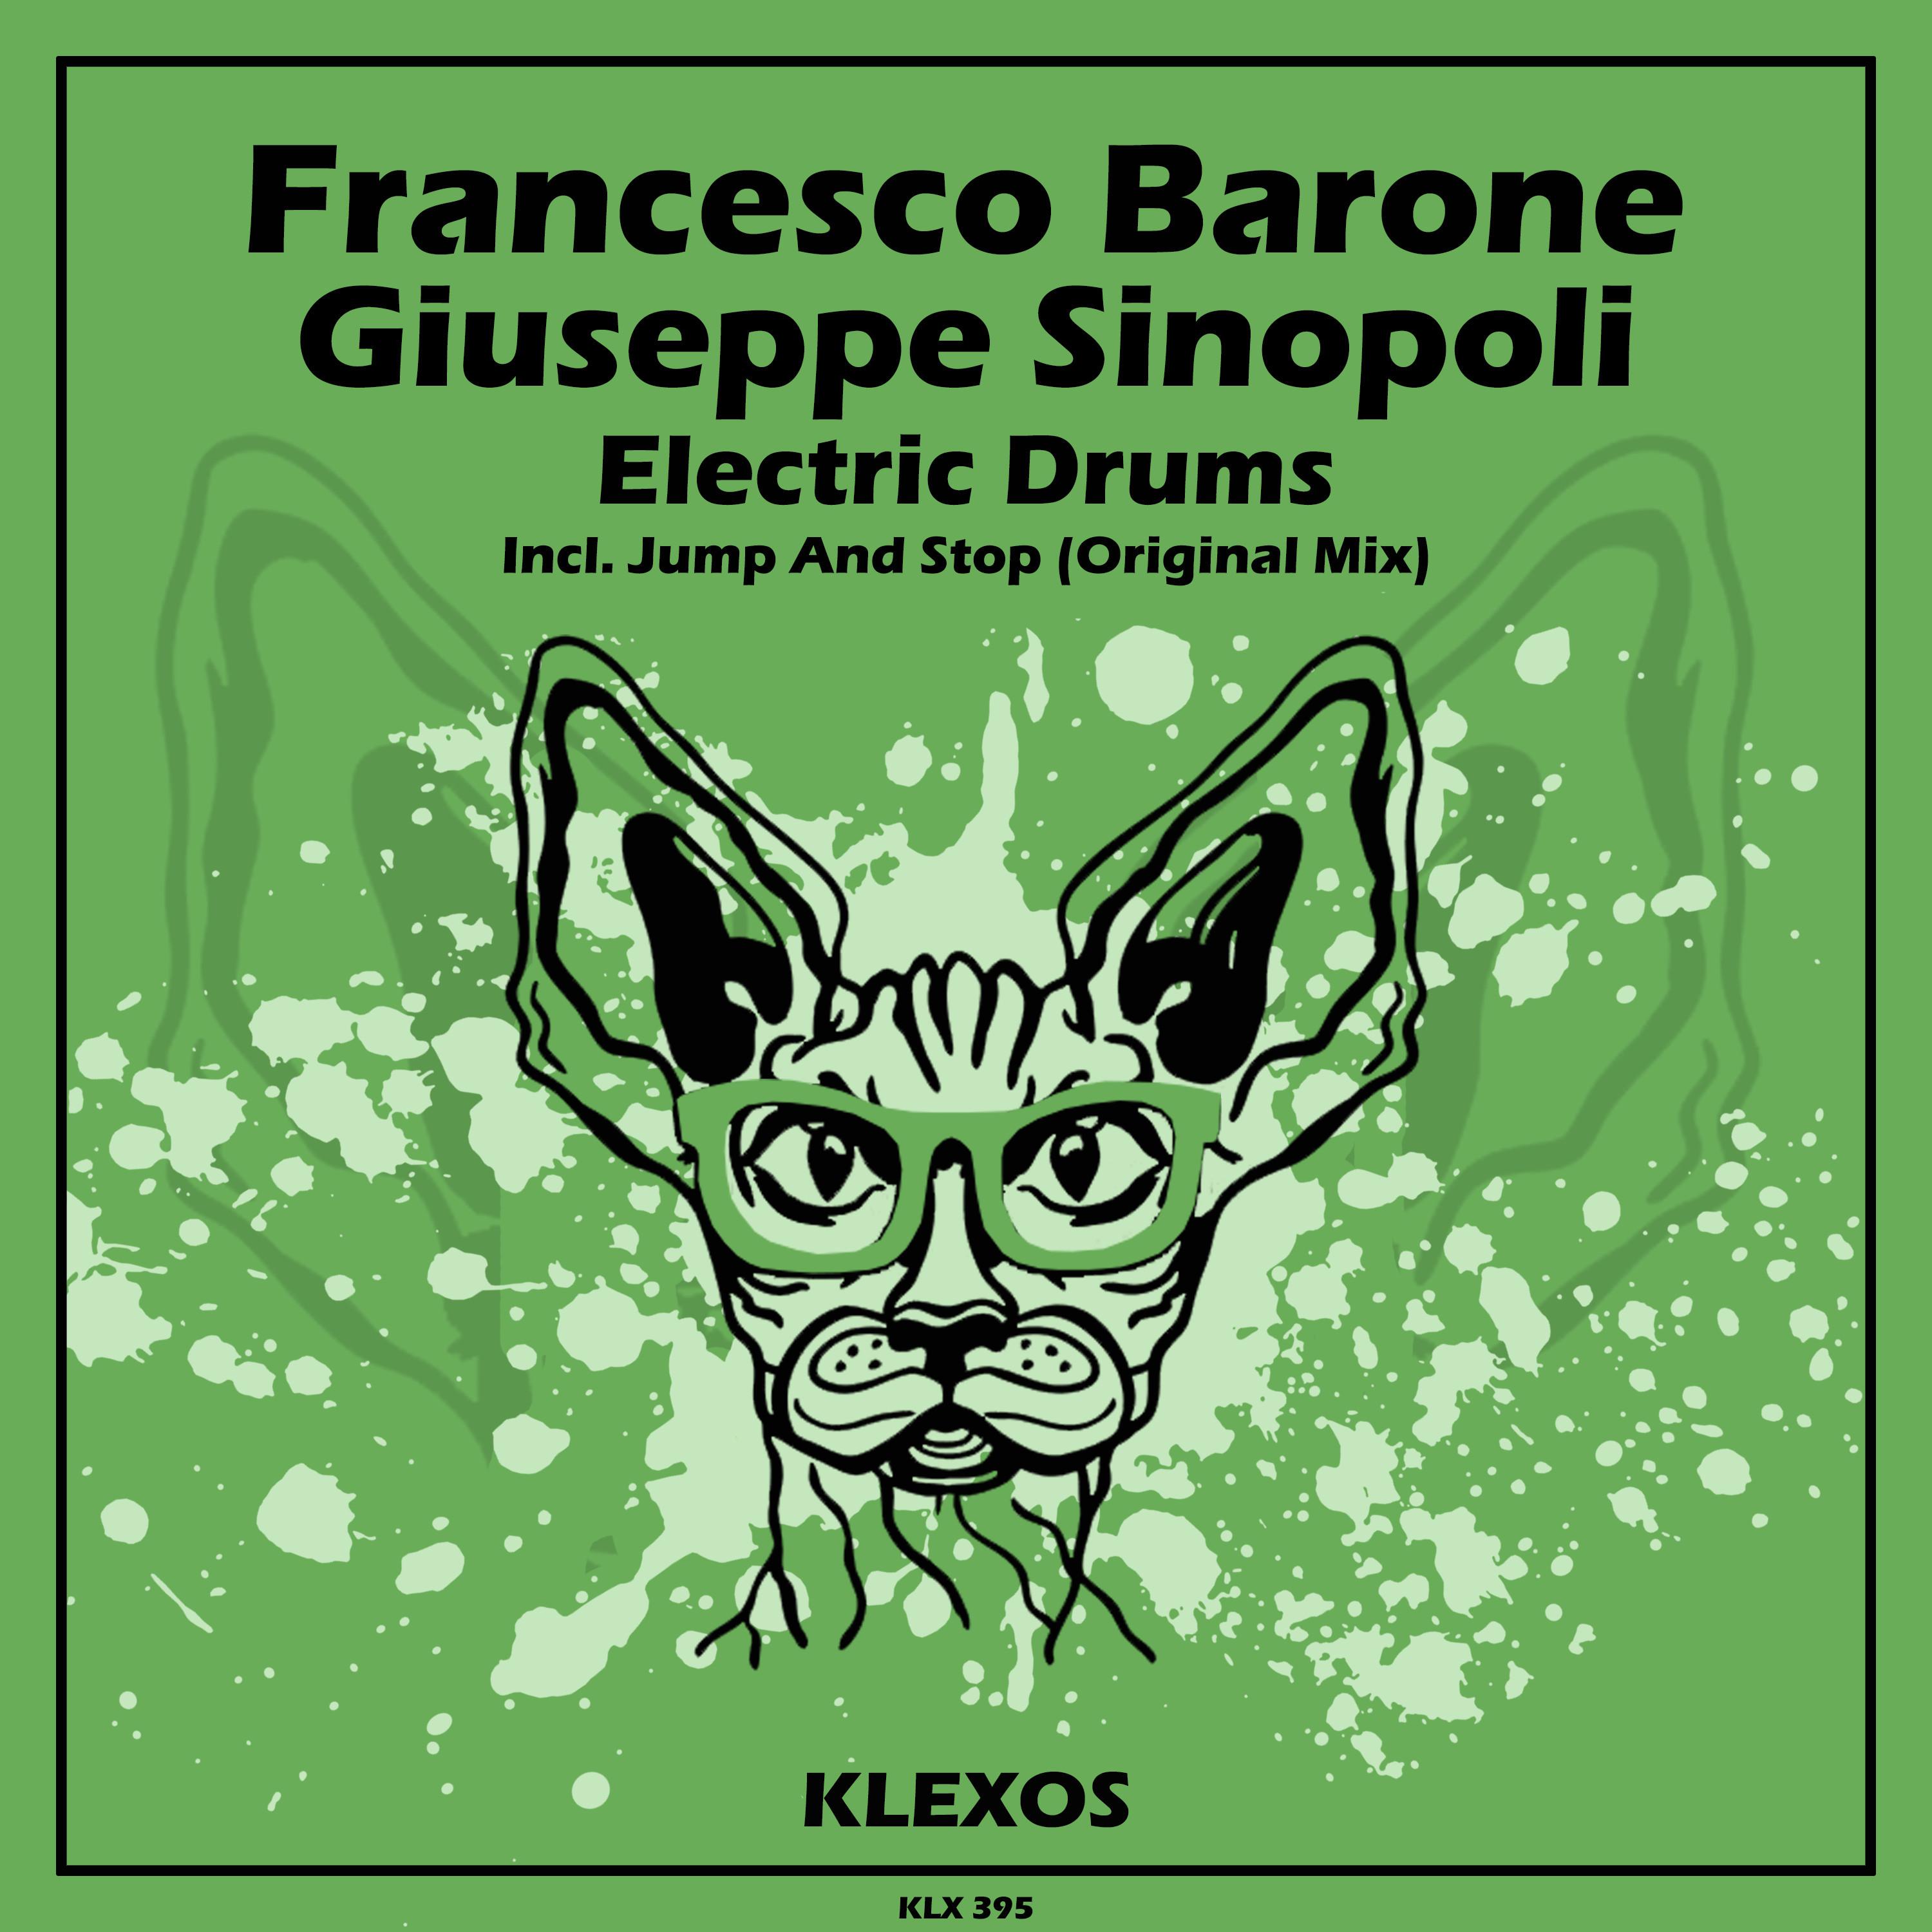 Francesco Barone - Electric Drums (Original Mix)